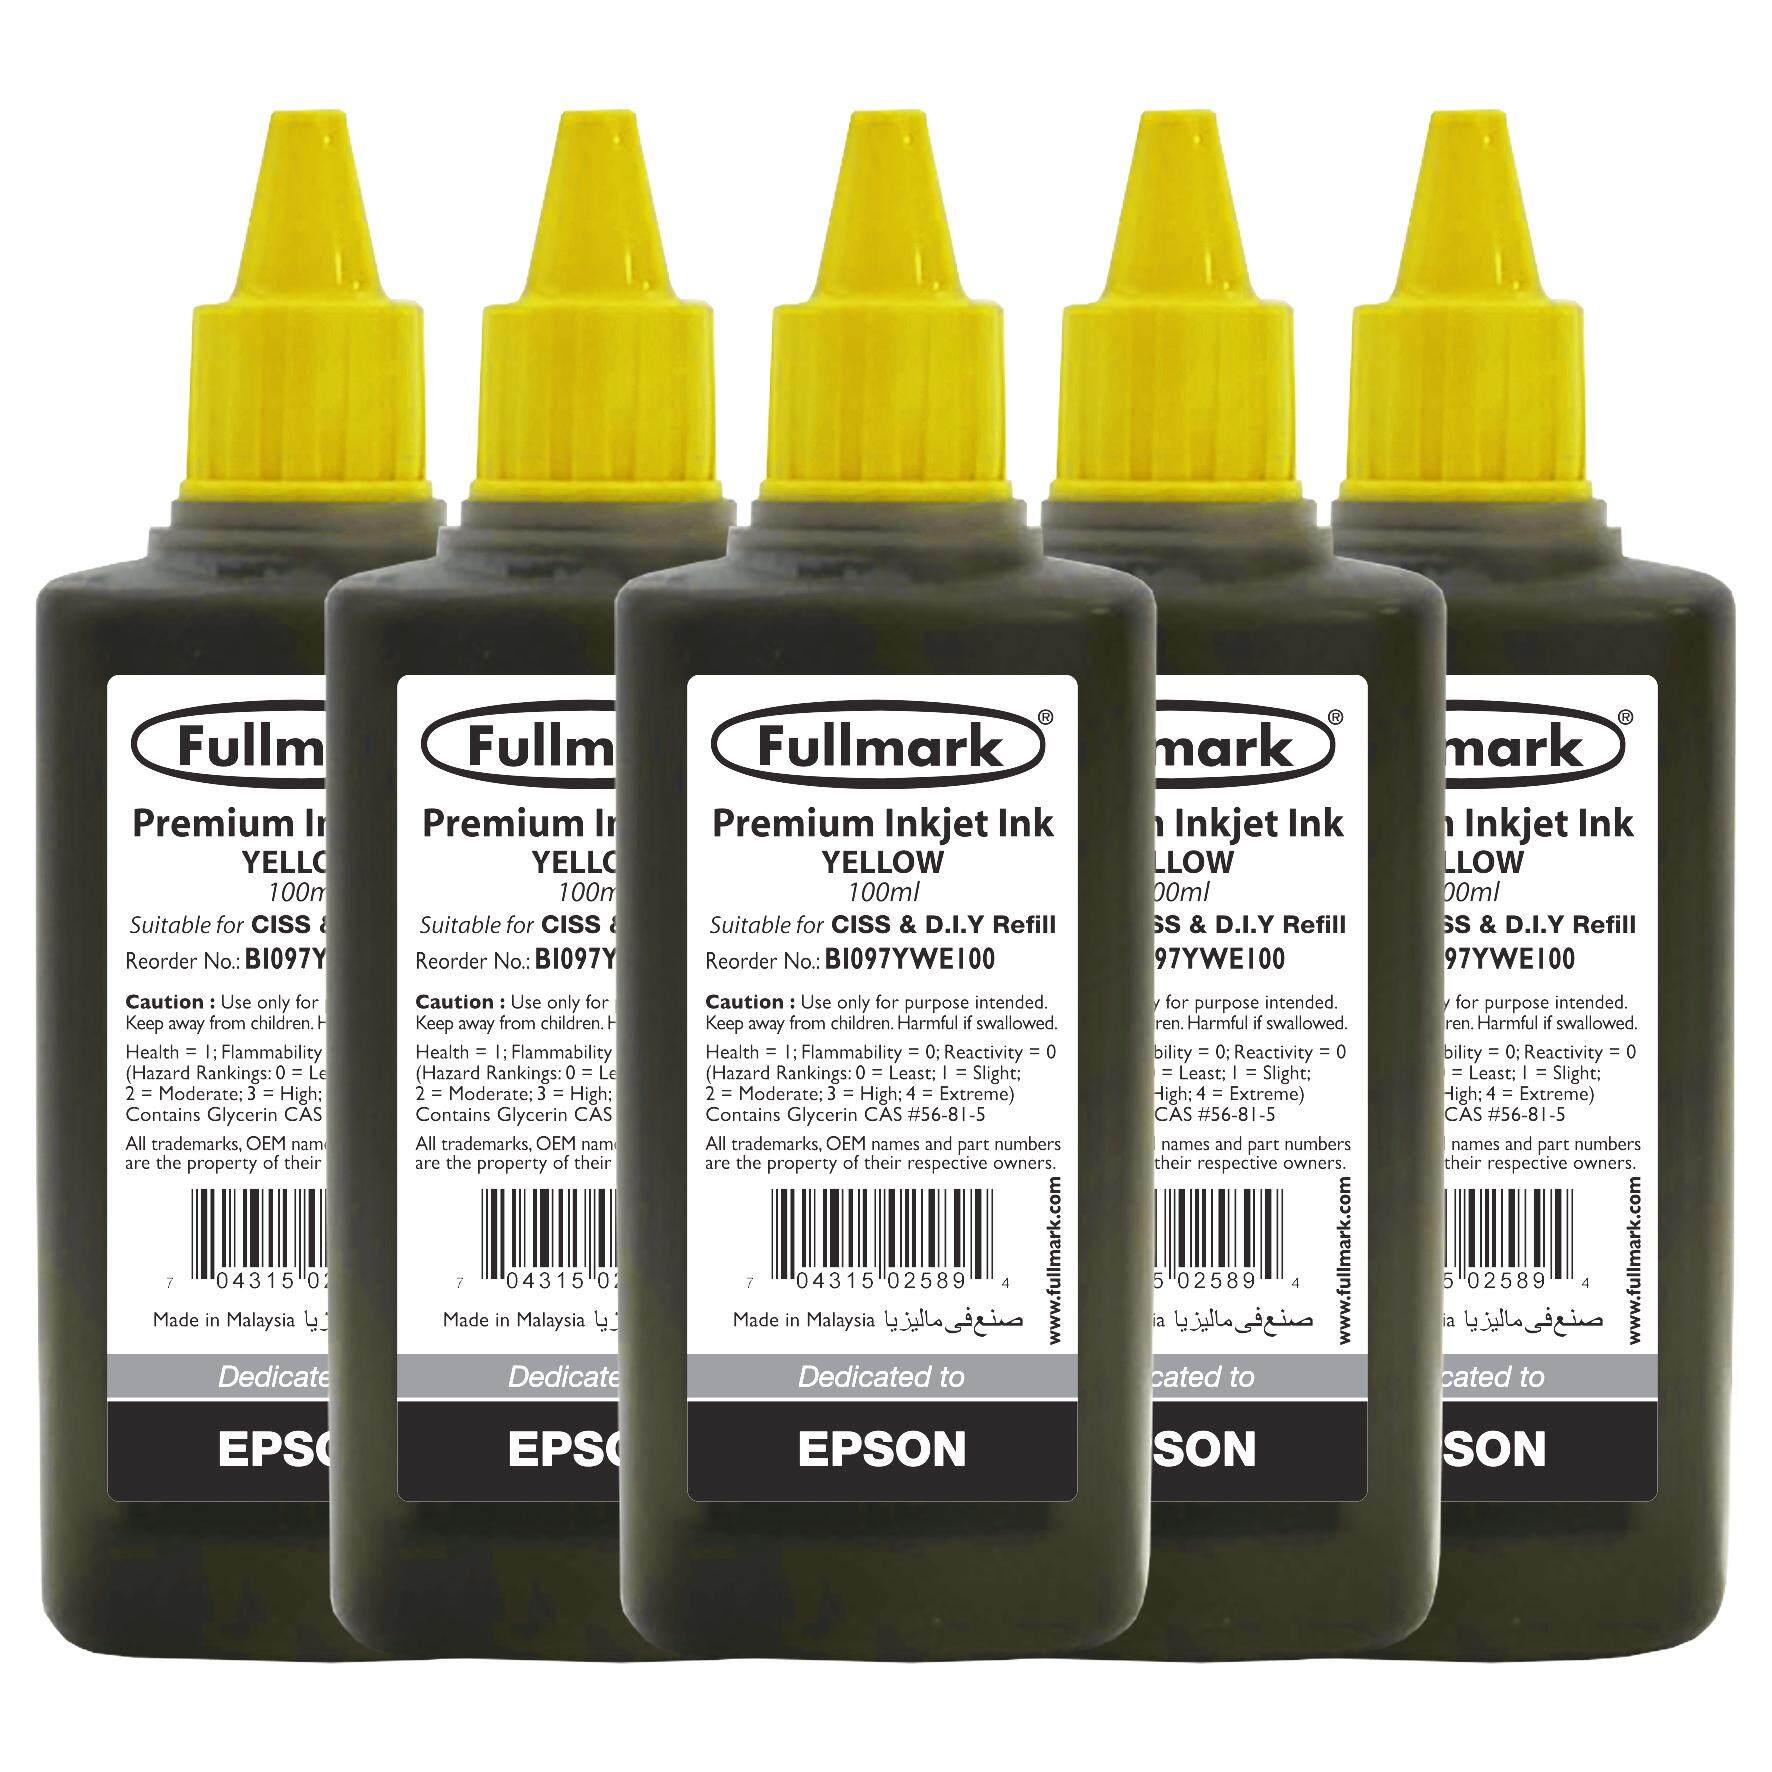 Fullmark BI097 Premium Inkjet Ink, 5 x 100ml (Yellow) - compatible with Epson